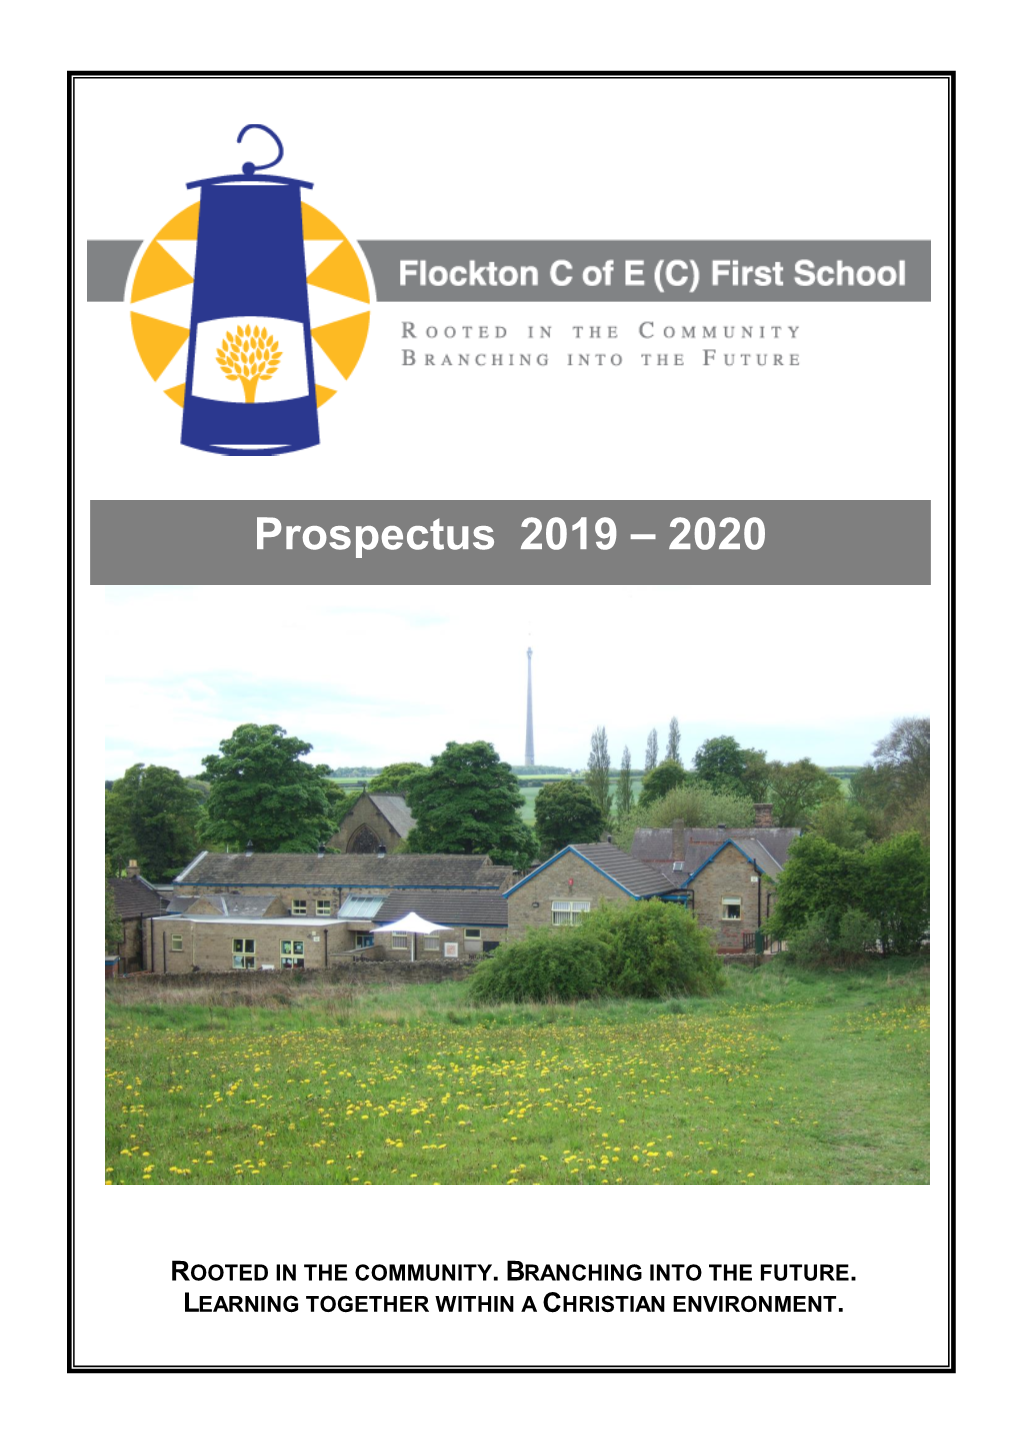 Flockton CE (C) First School